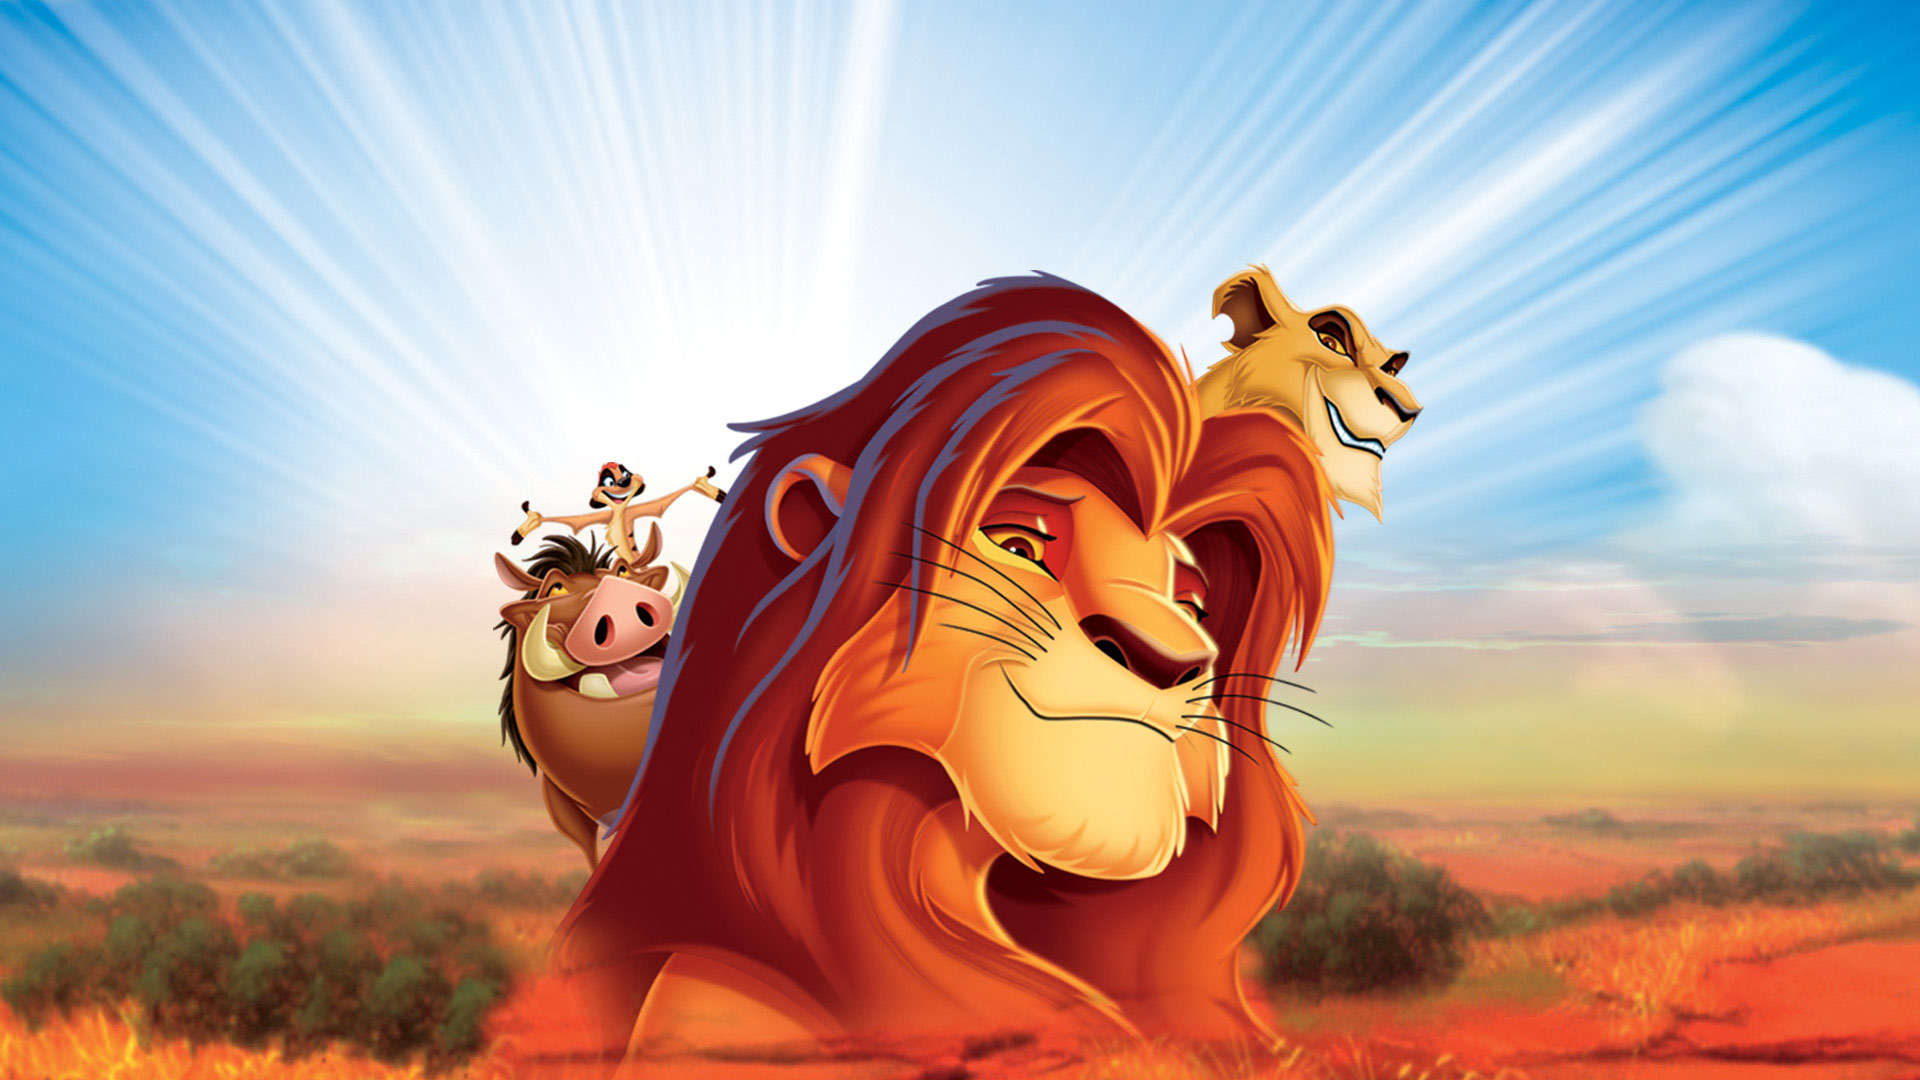 The Lion King 2: Simba's Pride - Disney+